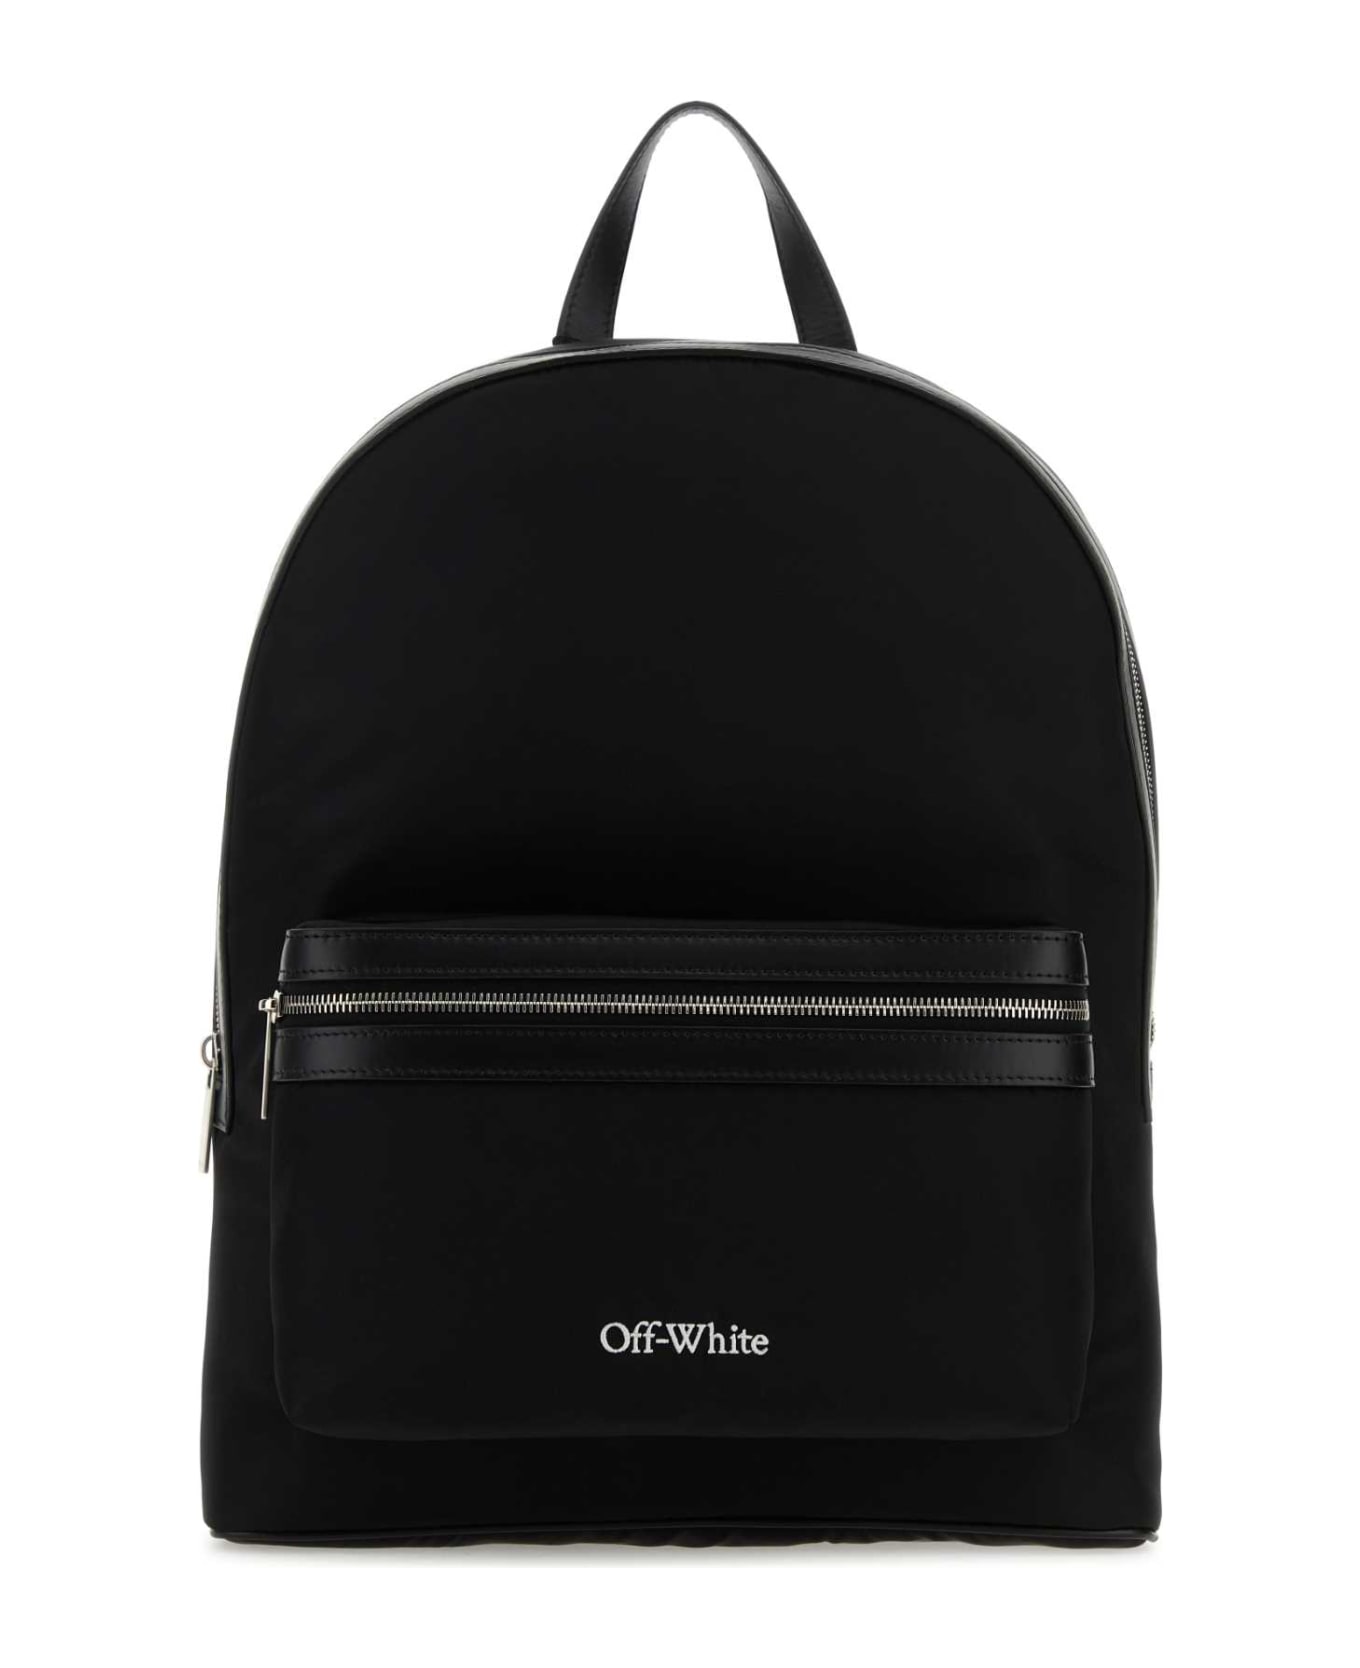 Off-White Black Nylon Core Backpack - 1000